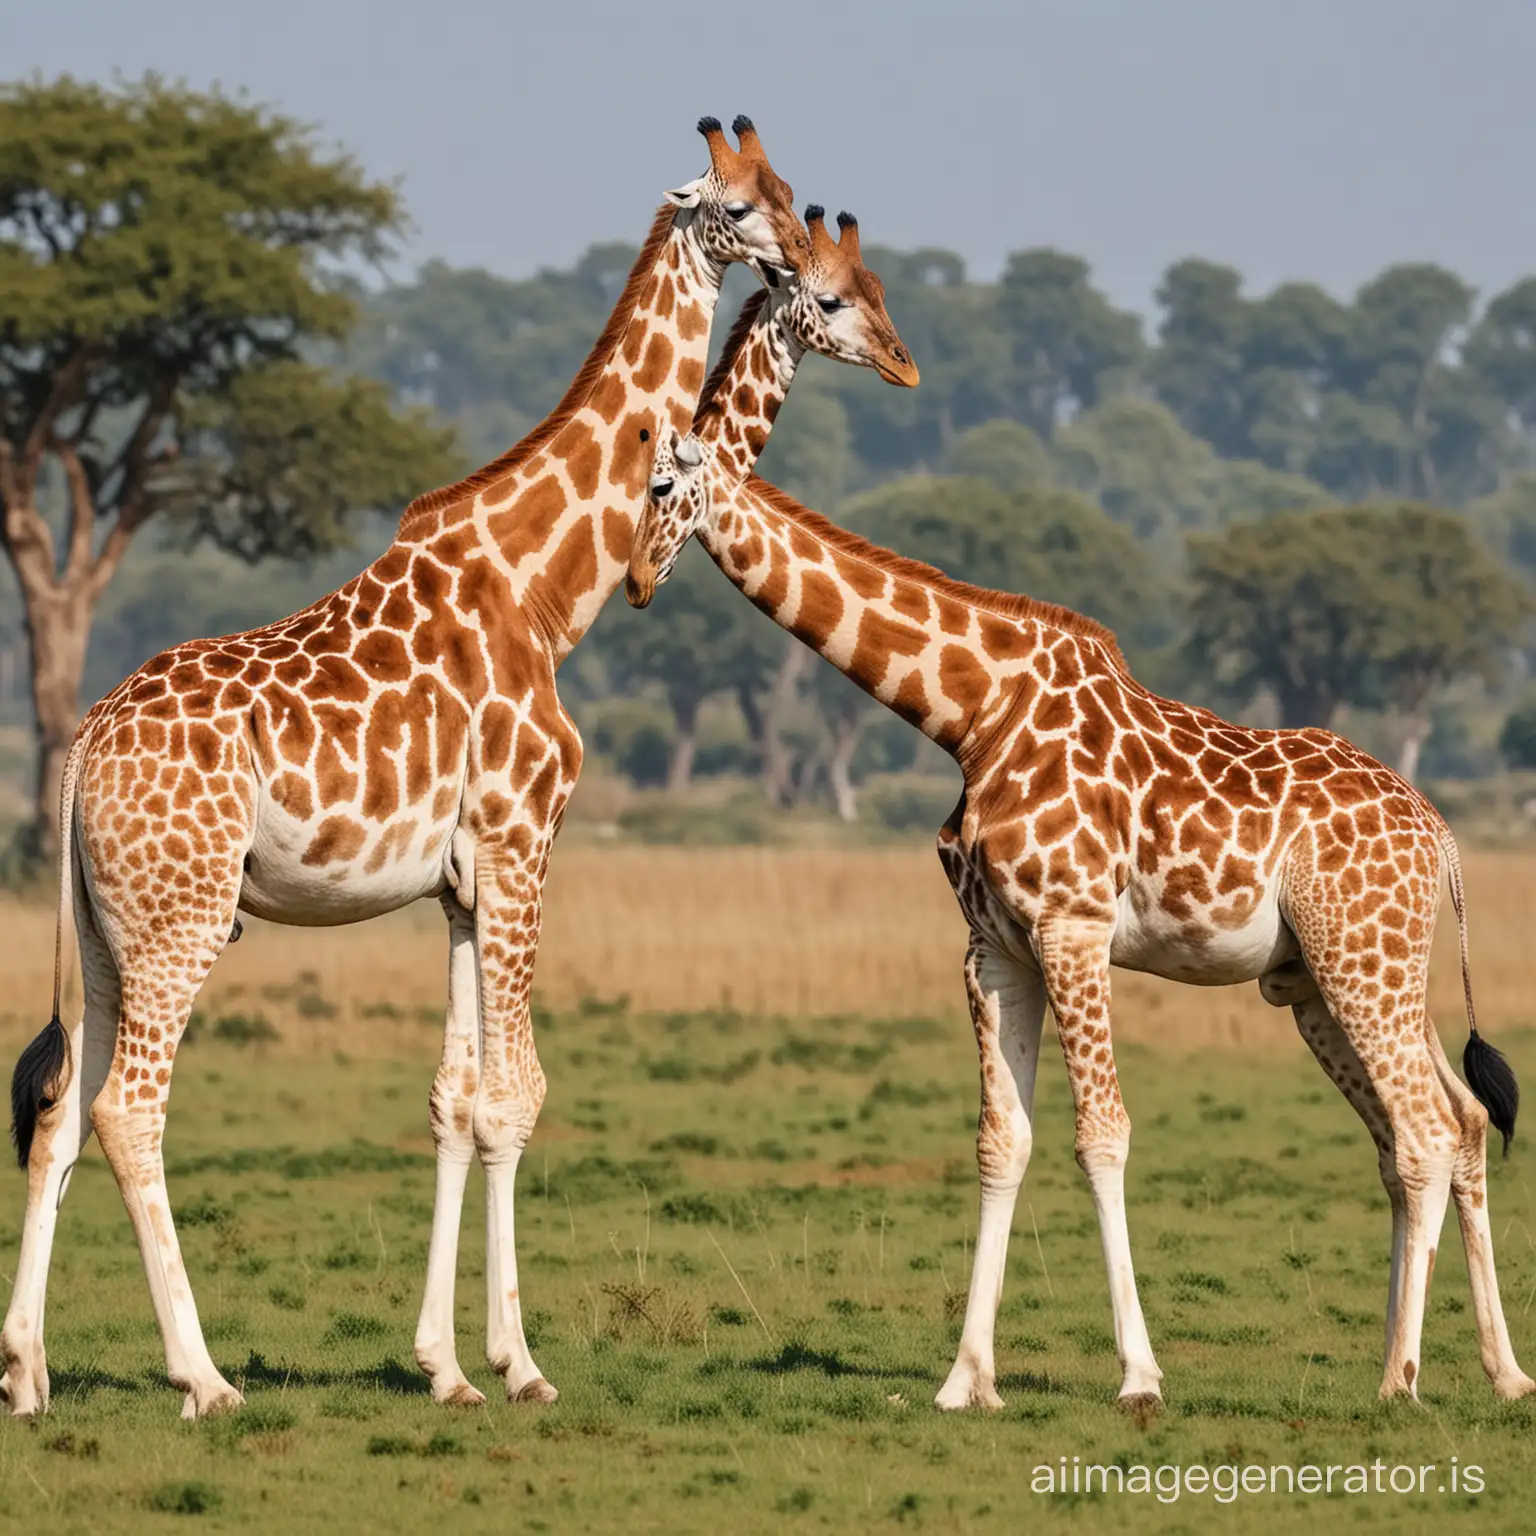 Breeding-Two-Giraffes-in-a-Savanna-Setting